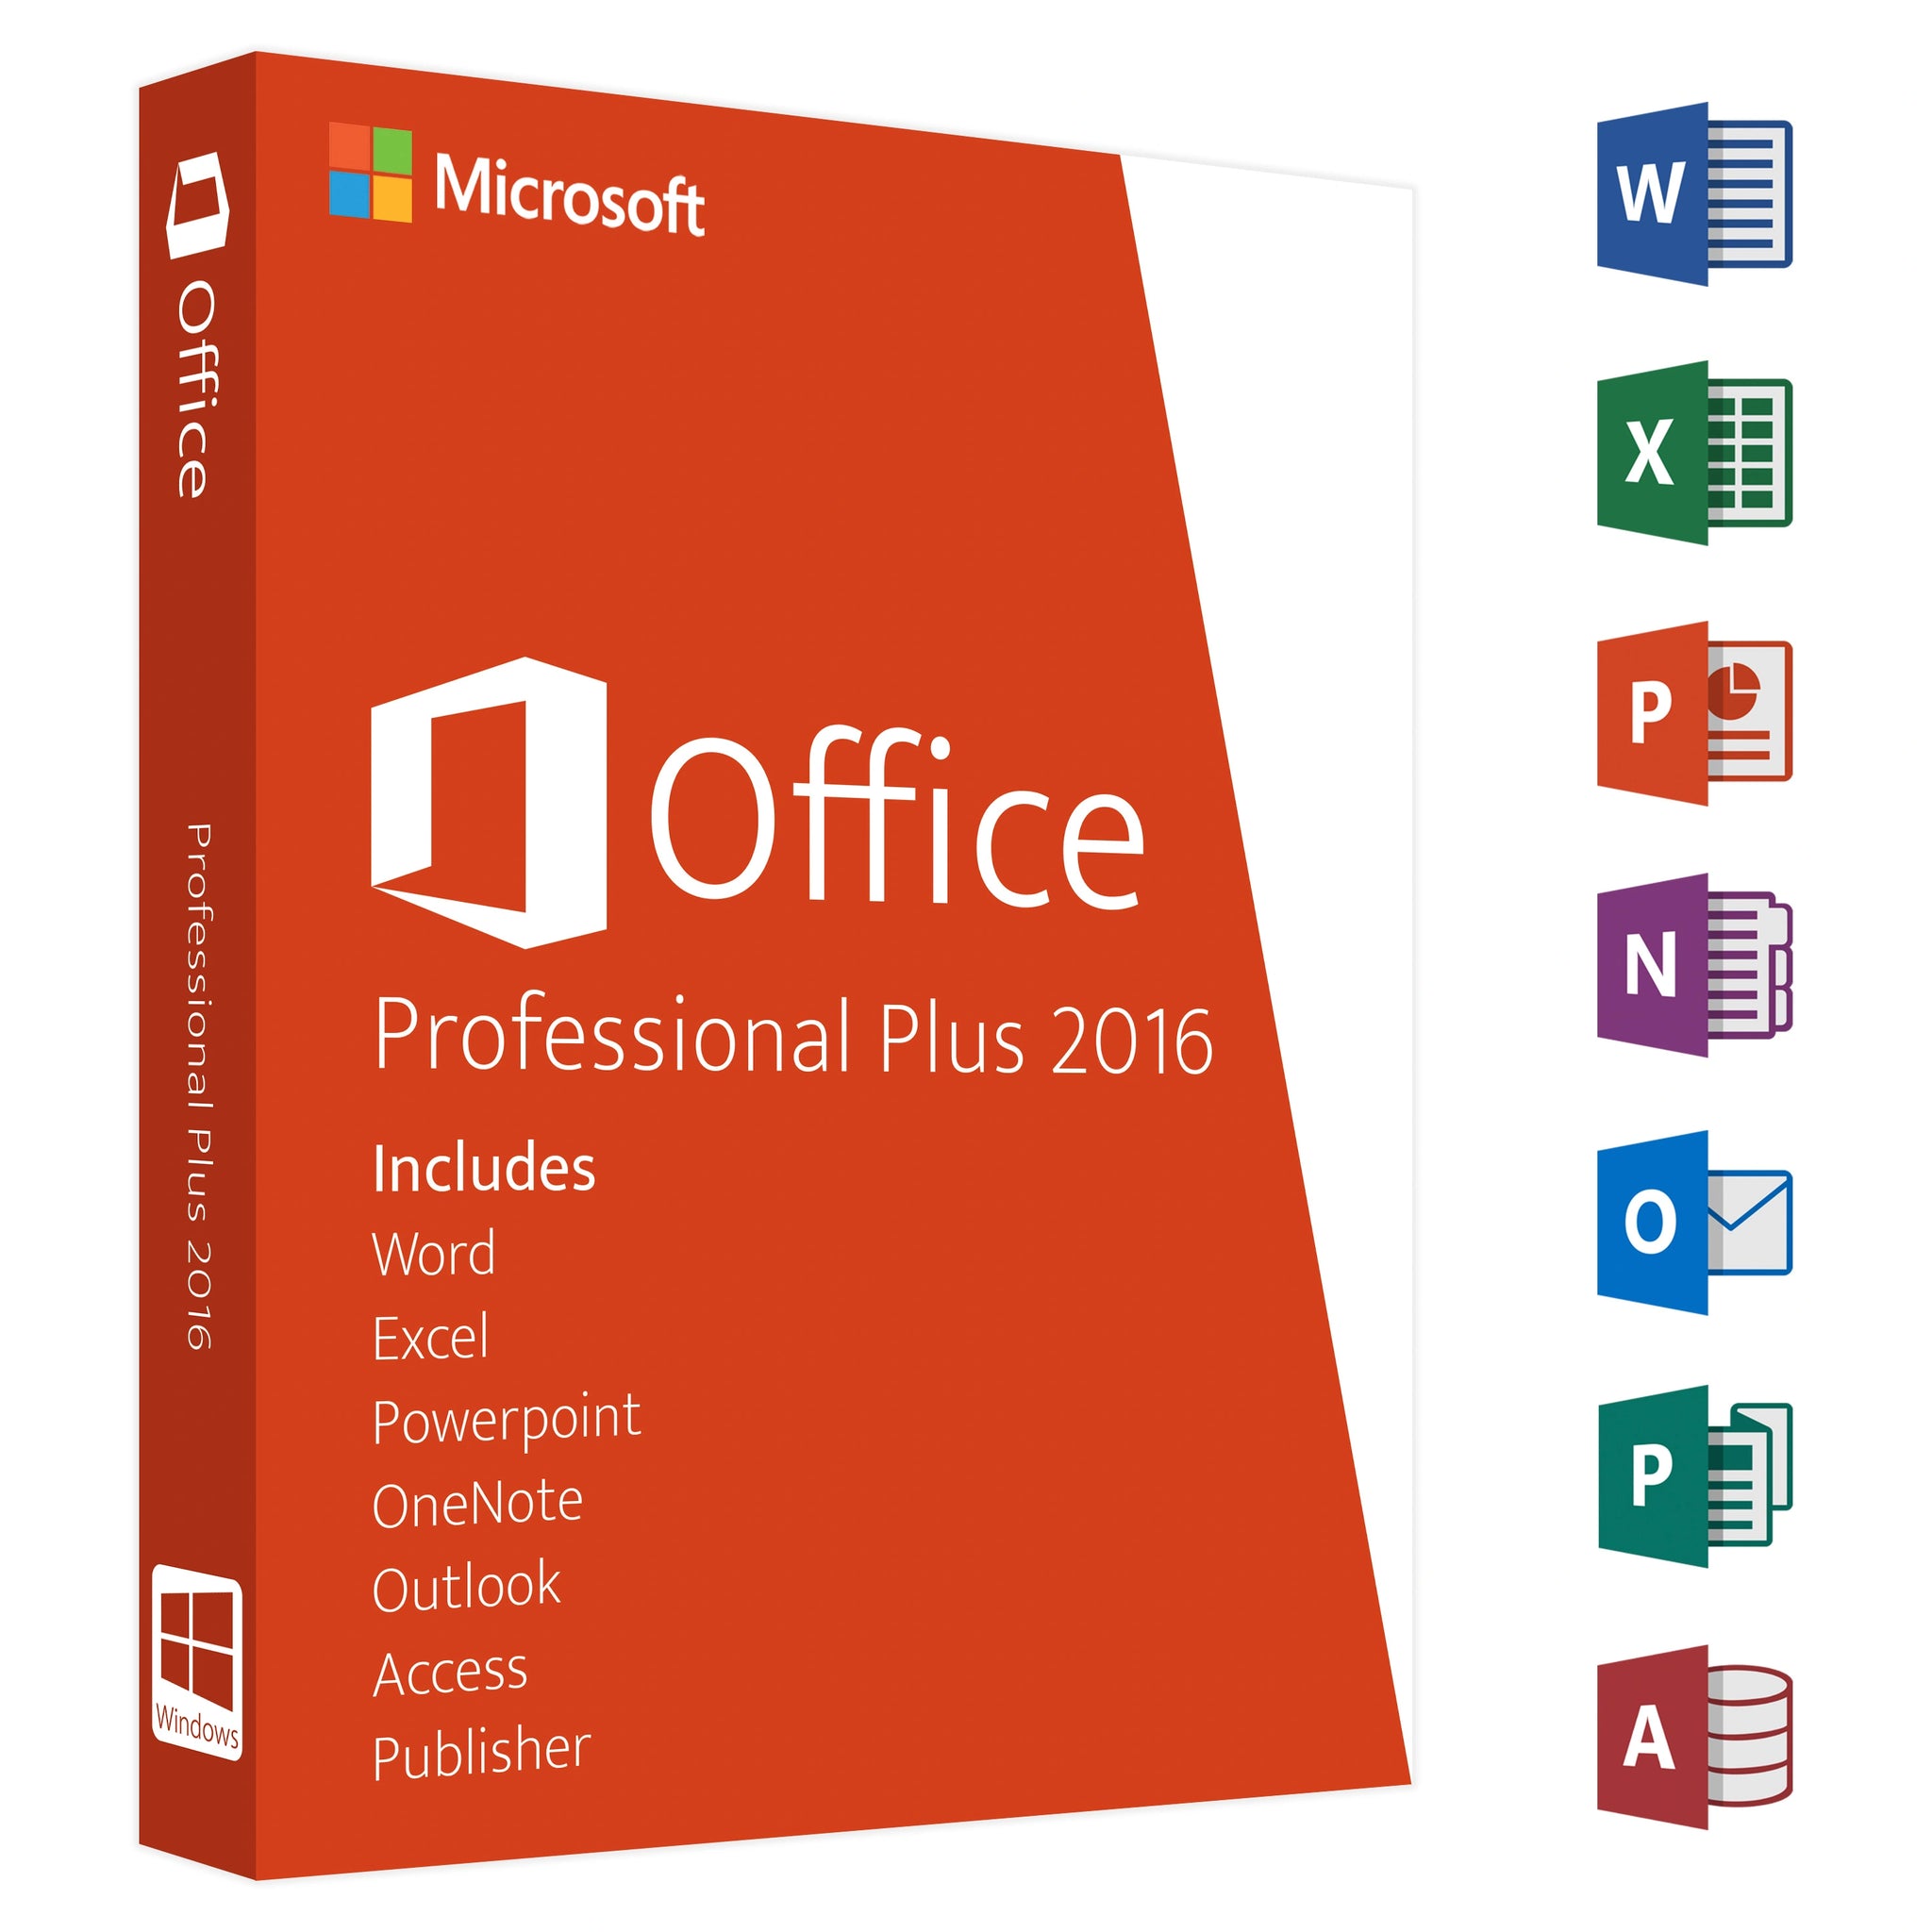 Microsoft Office 2016 Professional Plus- Lifetime License Key for 1 PC